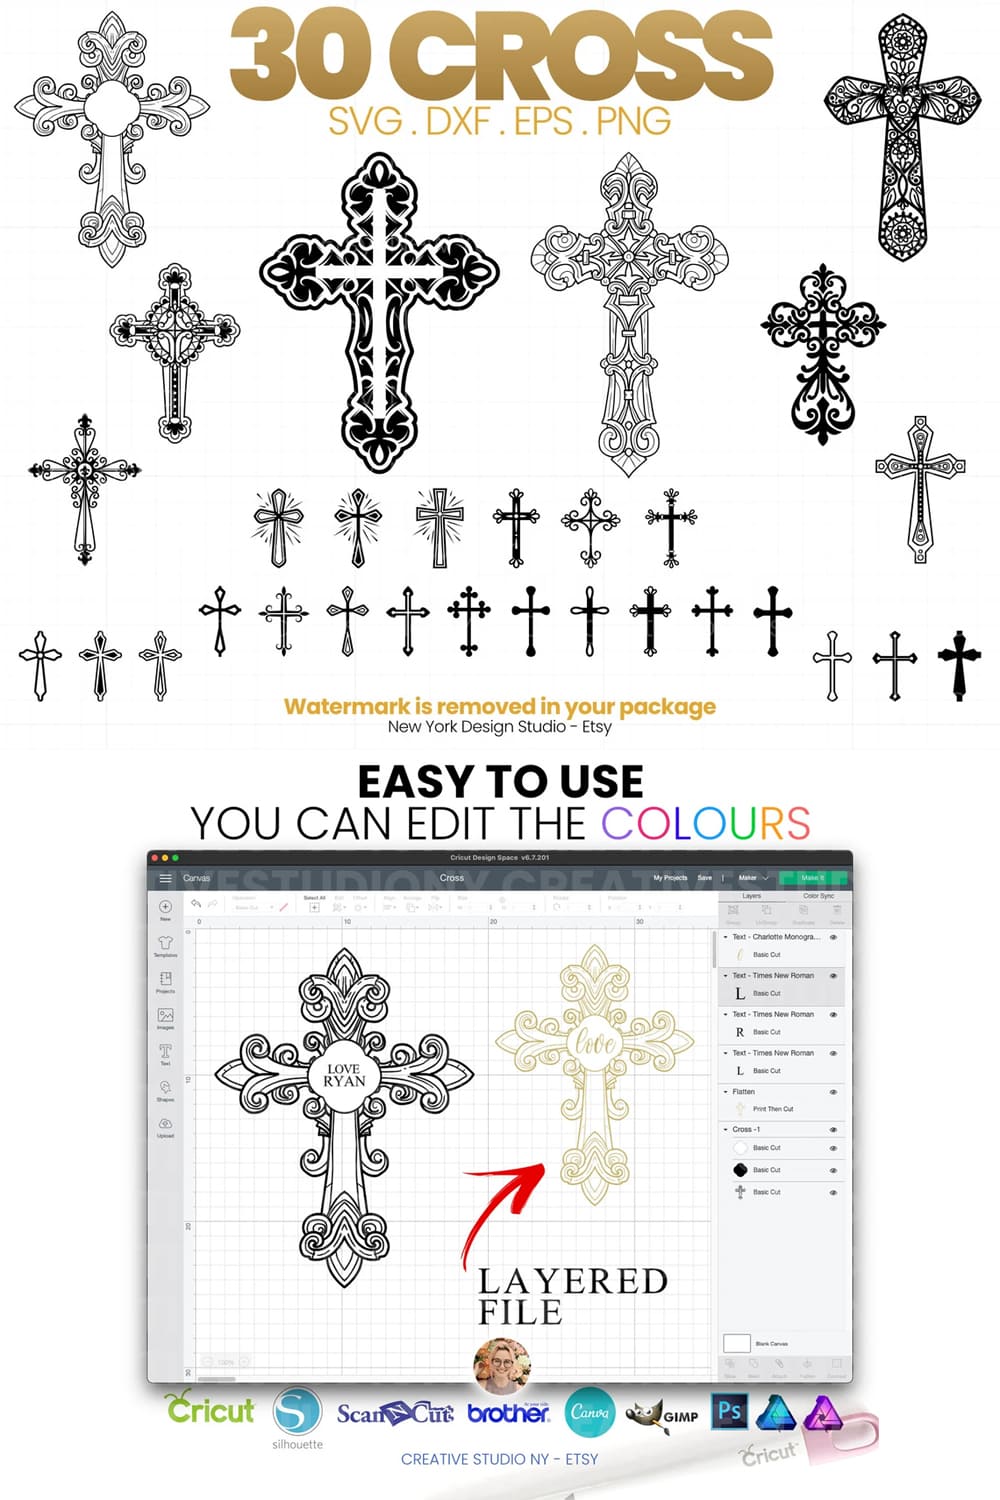 Cross SVG crosses clipart - pinterest image preview.